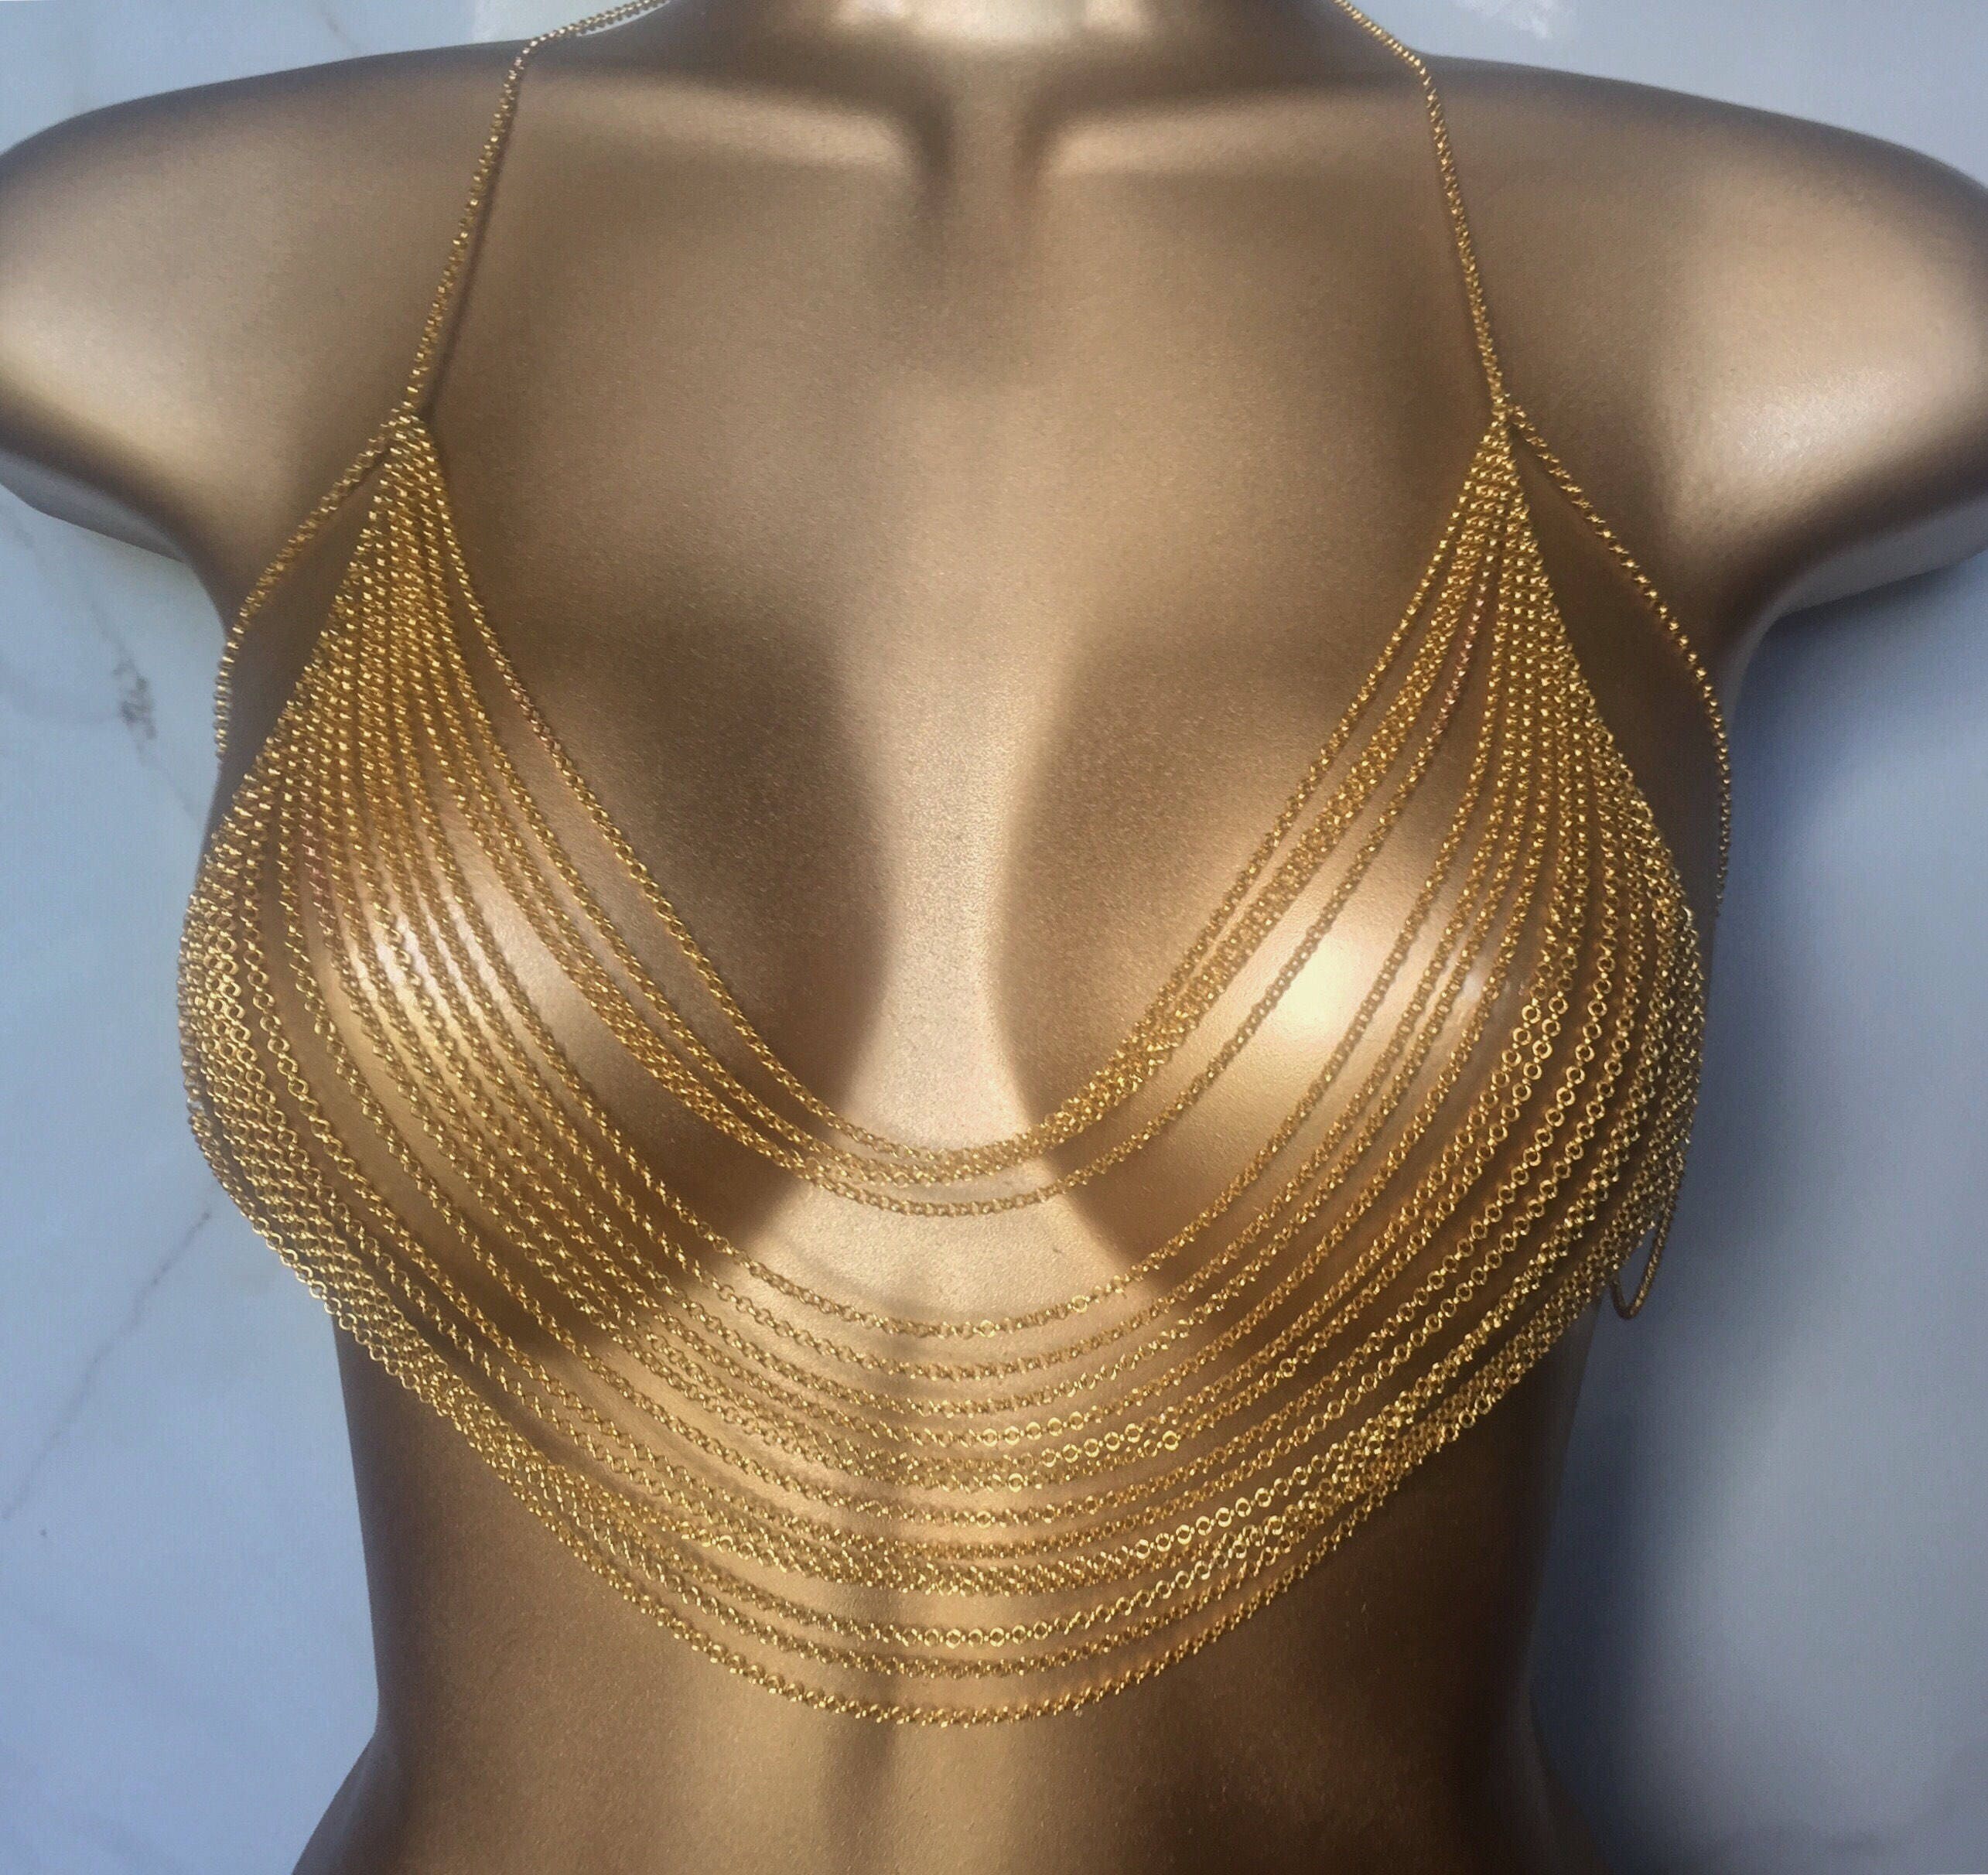 Goddess Bra Chain Top Body Jewelry Jewelry Bra Body Chain Bra Layered Chain  Top Sexy Lingerie Body Harness Gifts for Her -  Israel